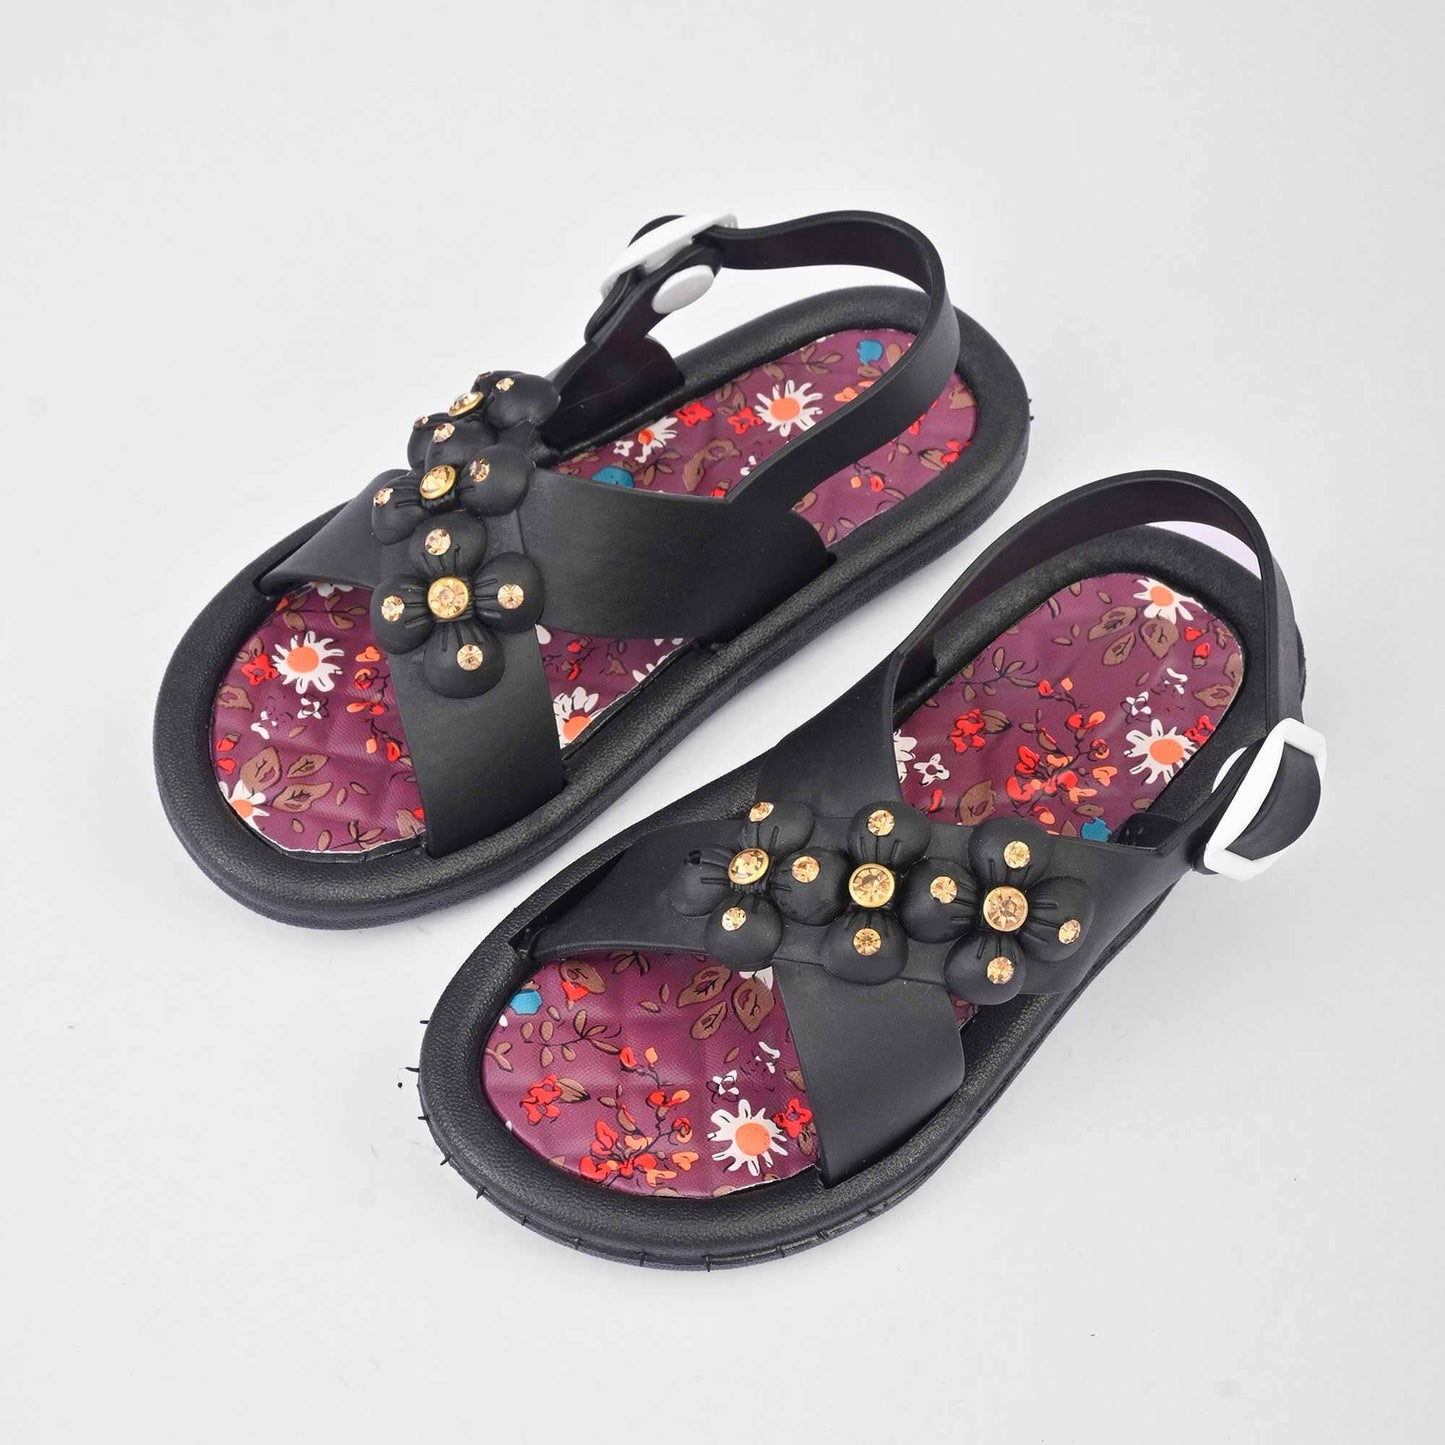 Seven Eleven Girl's Cross Over Style Comfort Sandals Girl's Shoes RAM Black EUR 20 